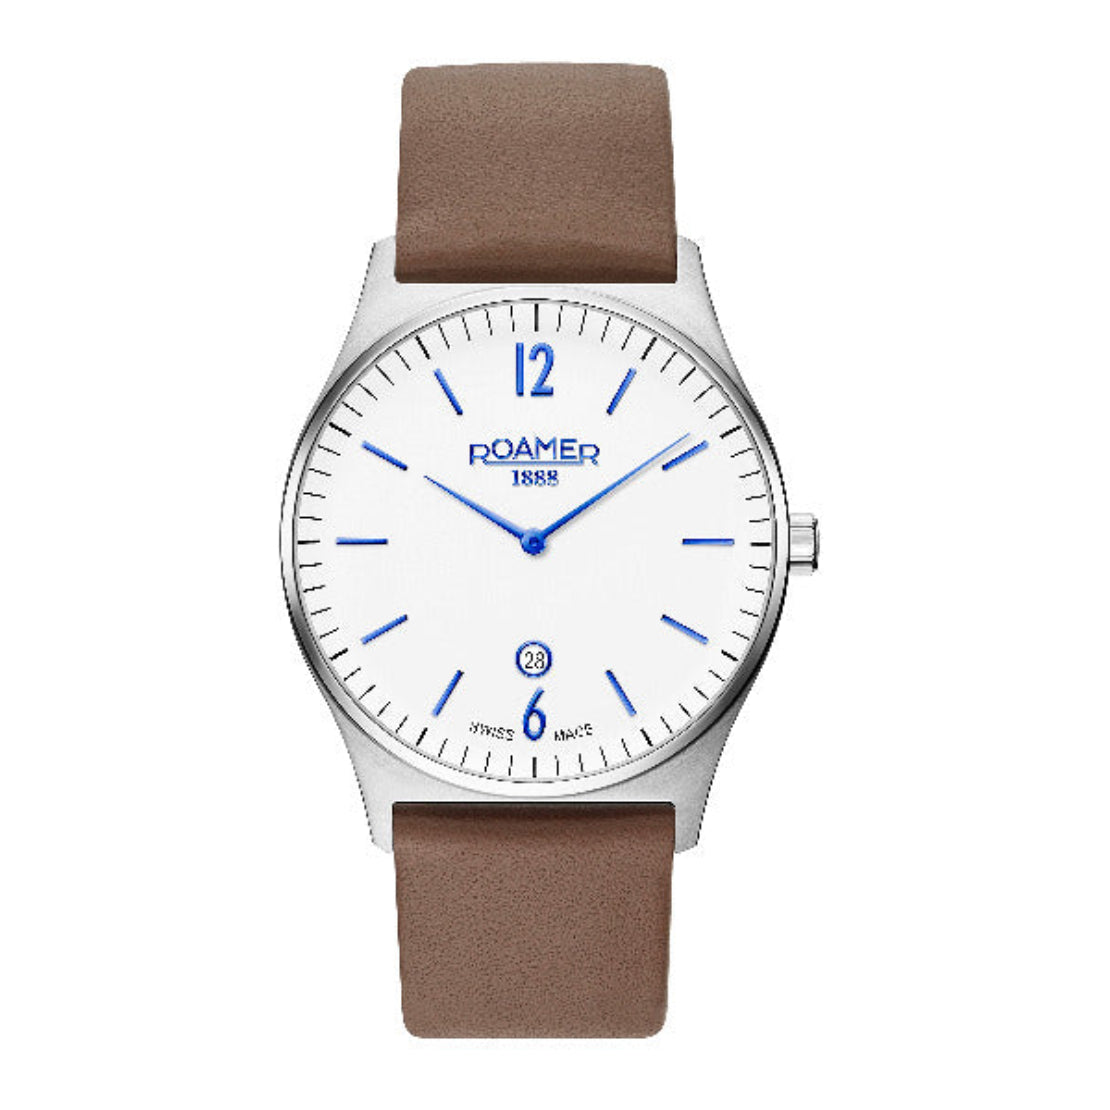 Romer Men's Quartz Watch, White Dial - ROA-0042